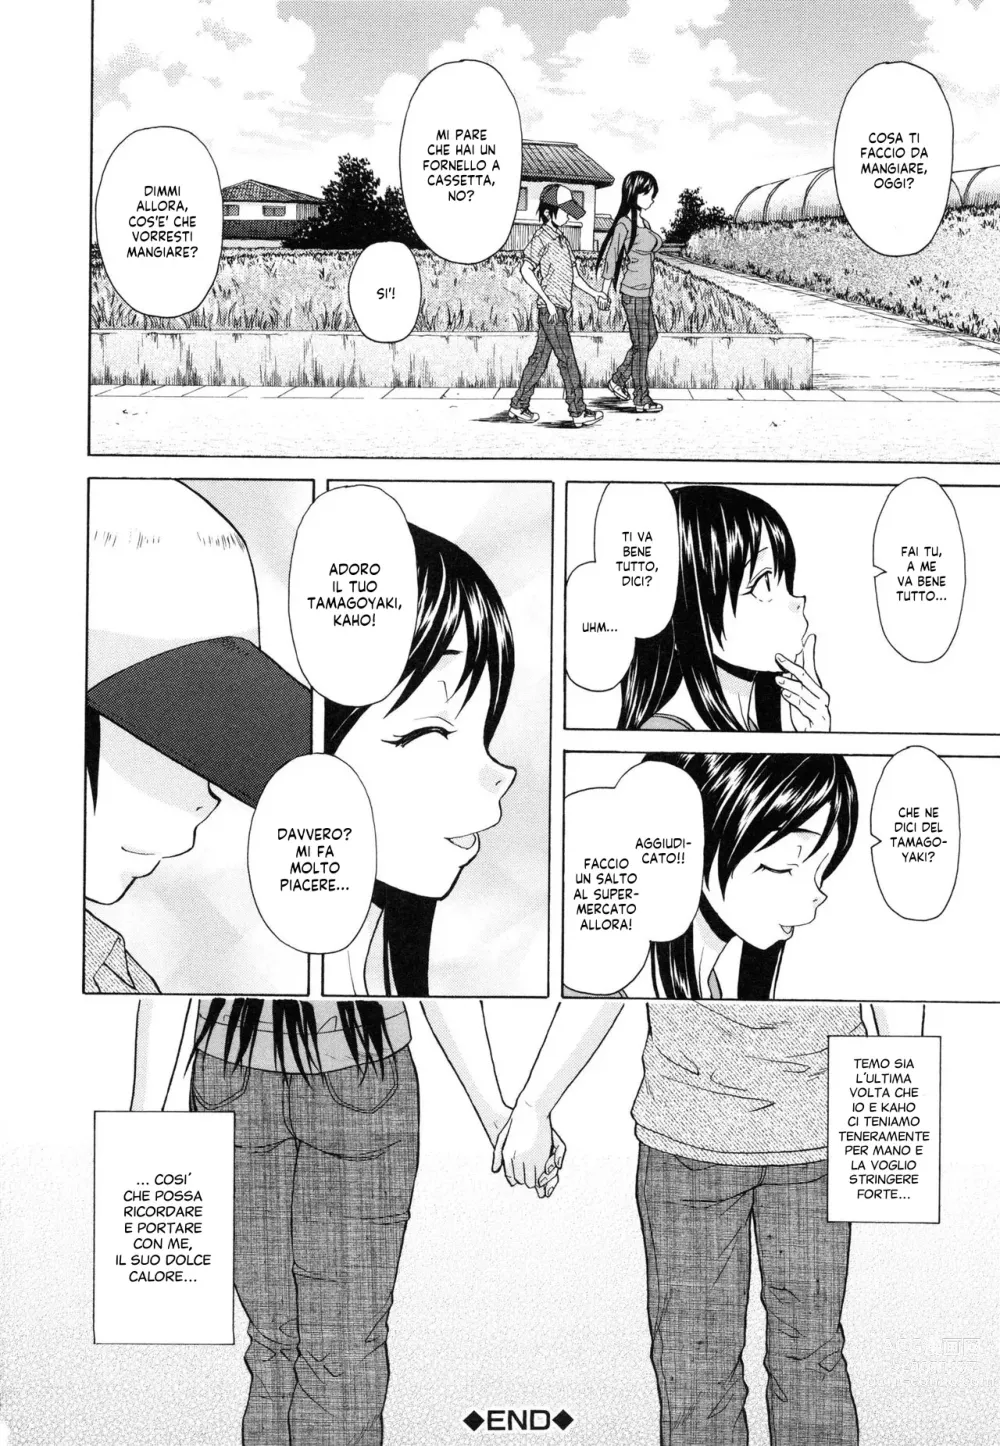 Page 242 of manga Cugine e Cognate...